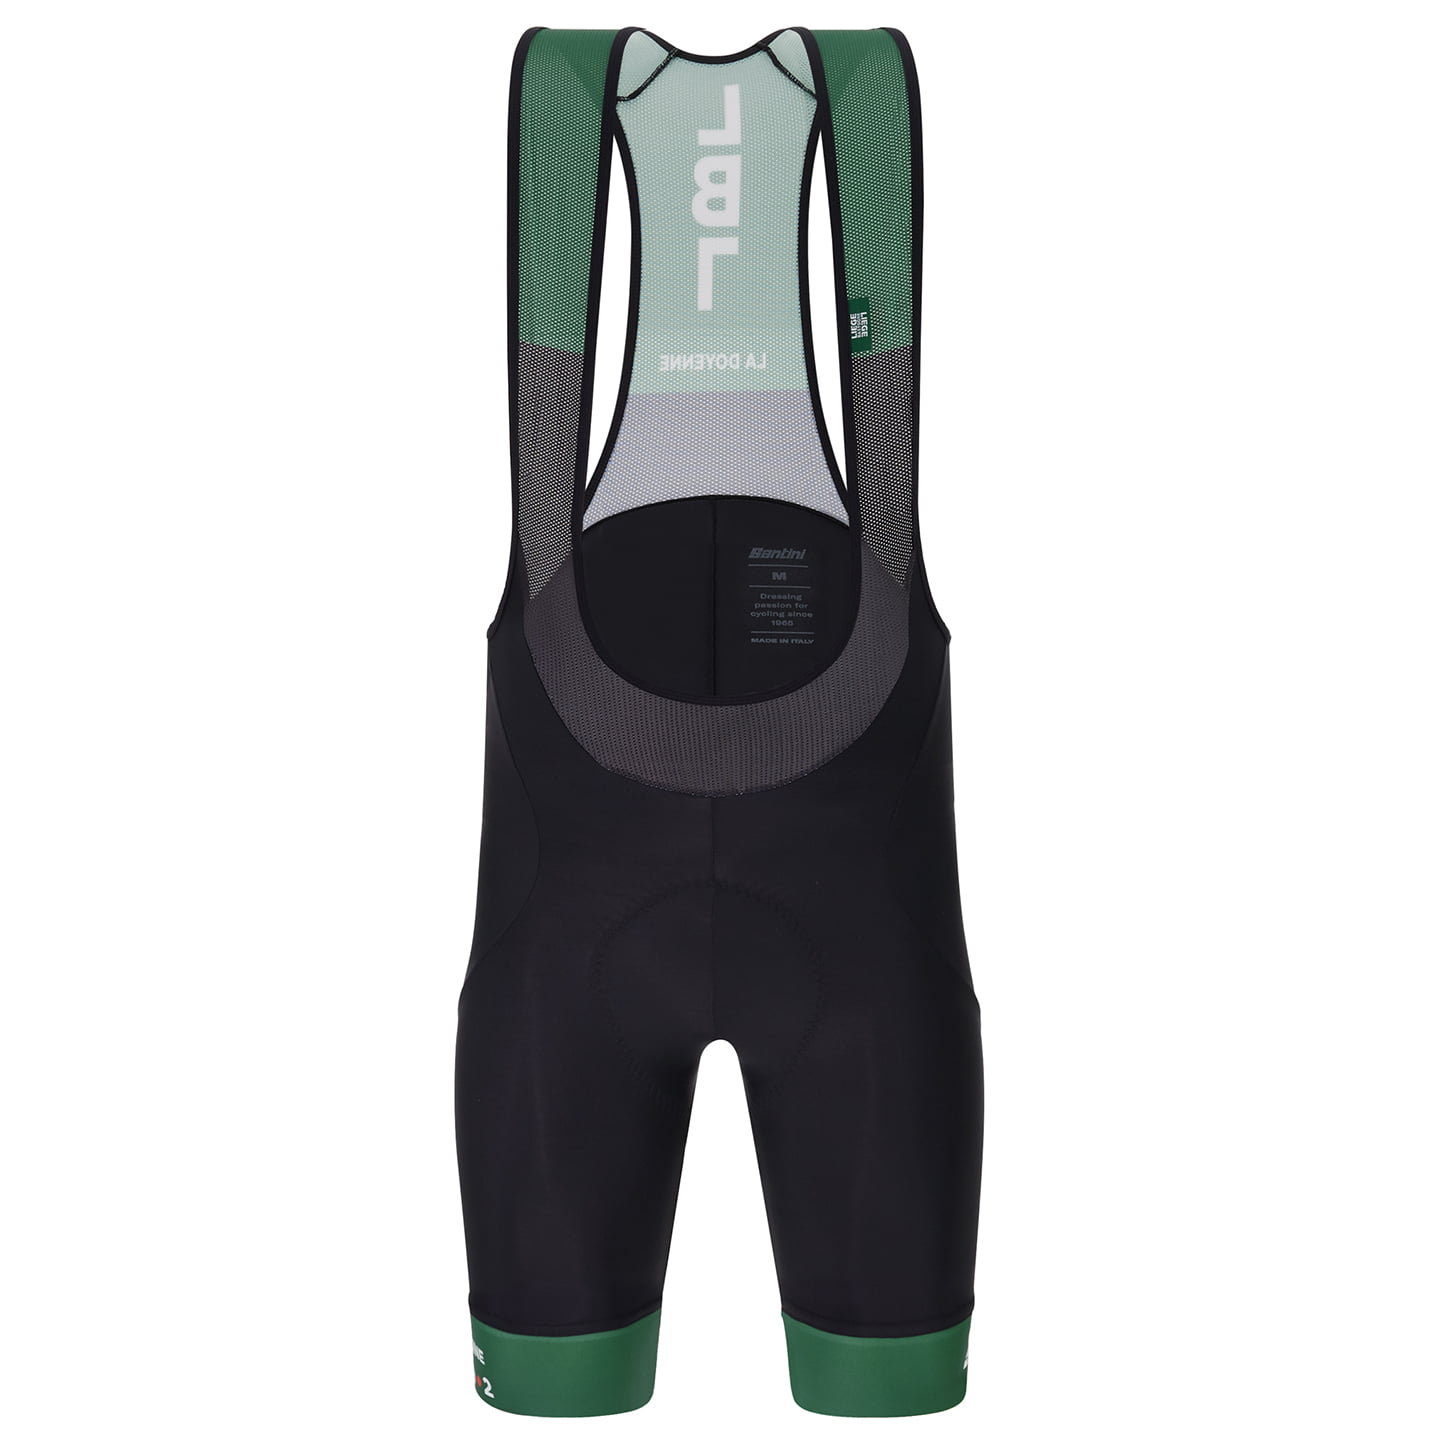 SANTINI Liege-Bastogne-Liege 2023 Bib Shorts, for men, size M, Cycle shorts, Cycling clothing